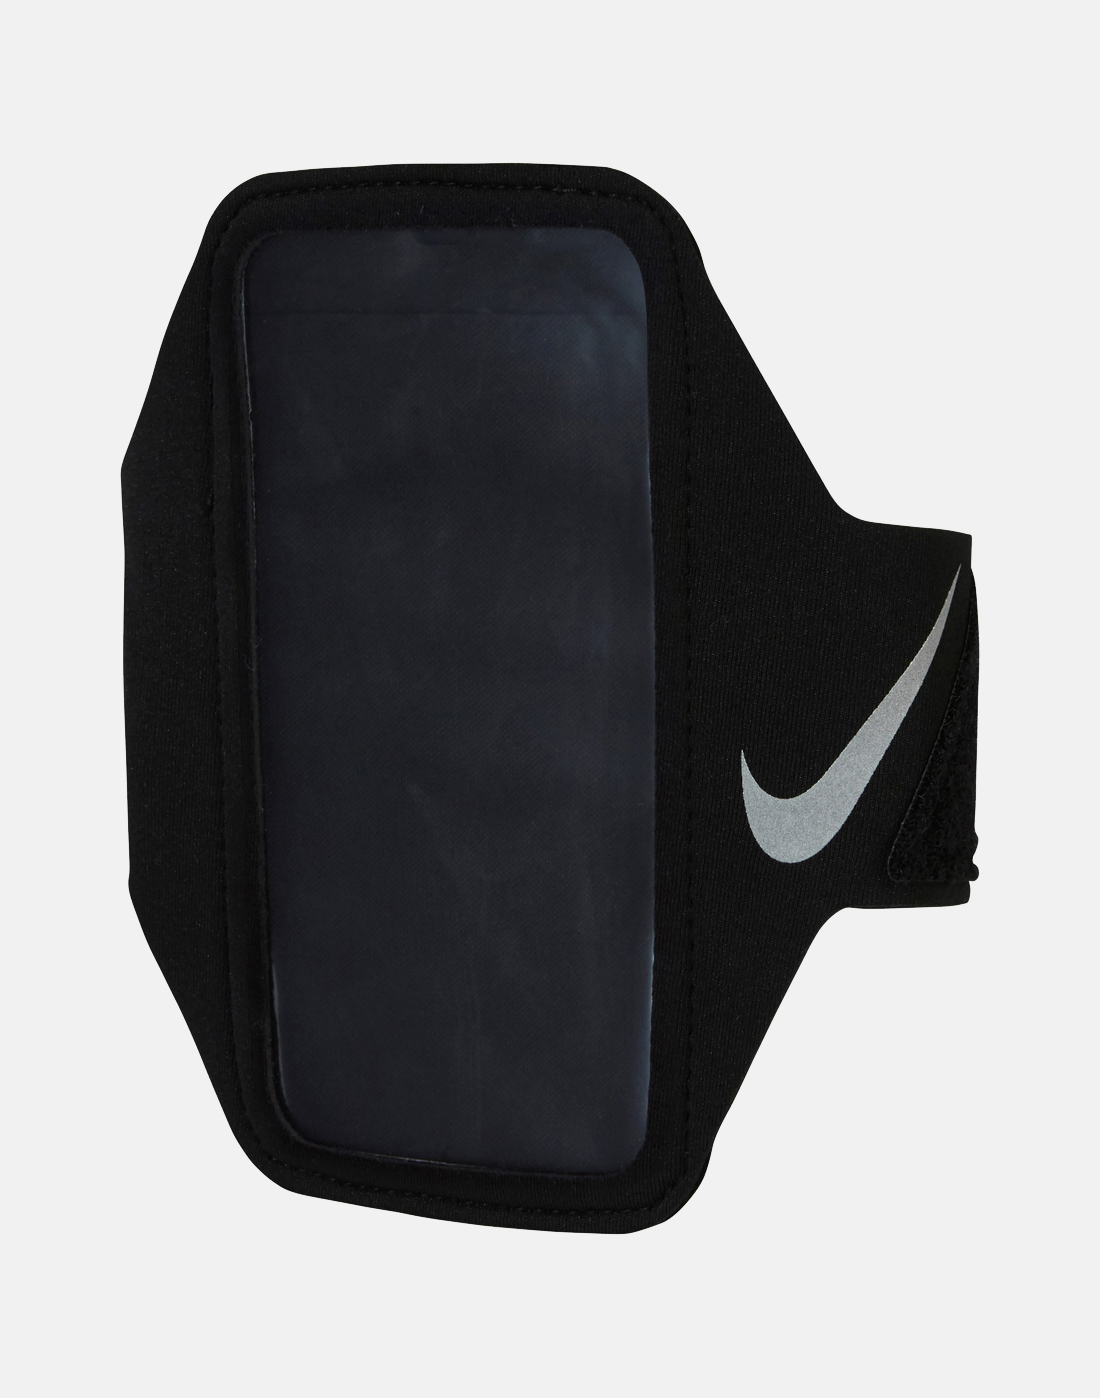 Nike Lean Arm Band - Black | Life Style Sports IE